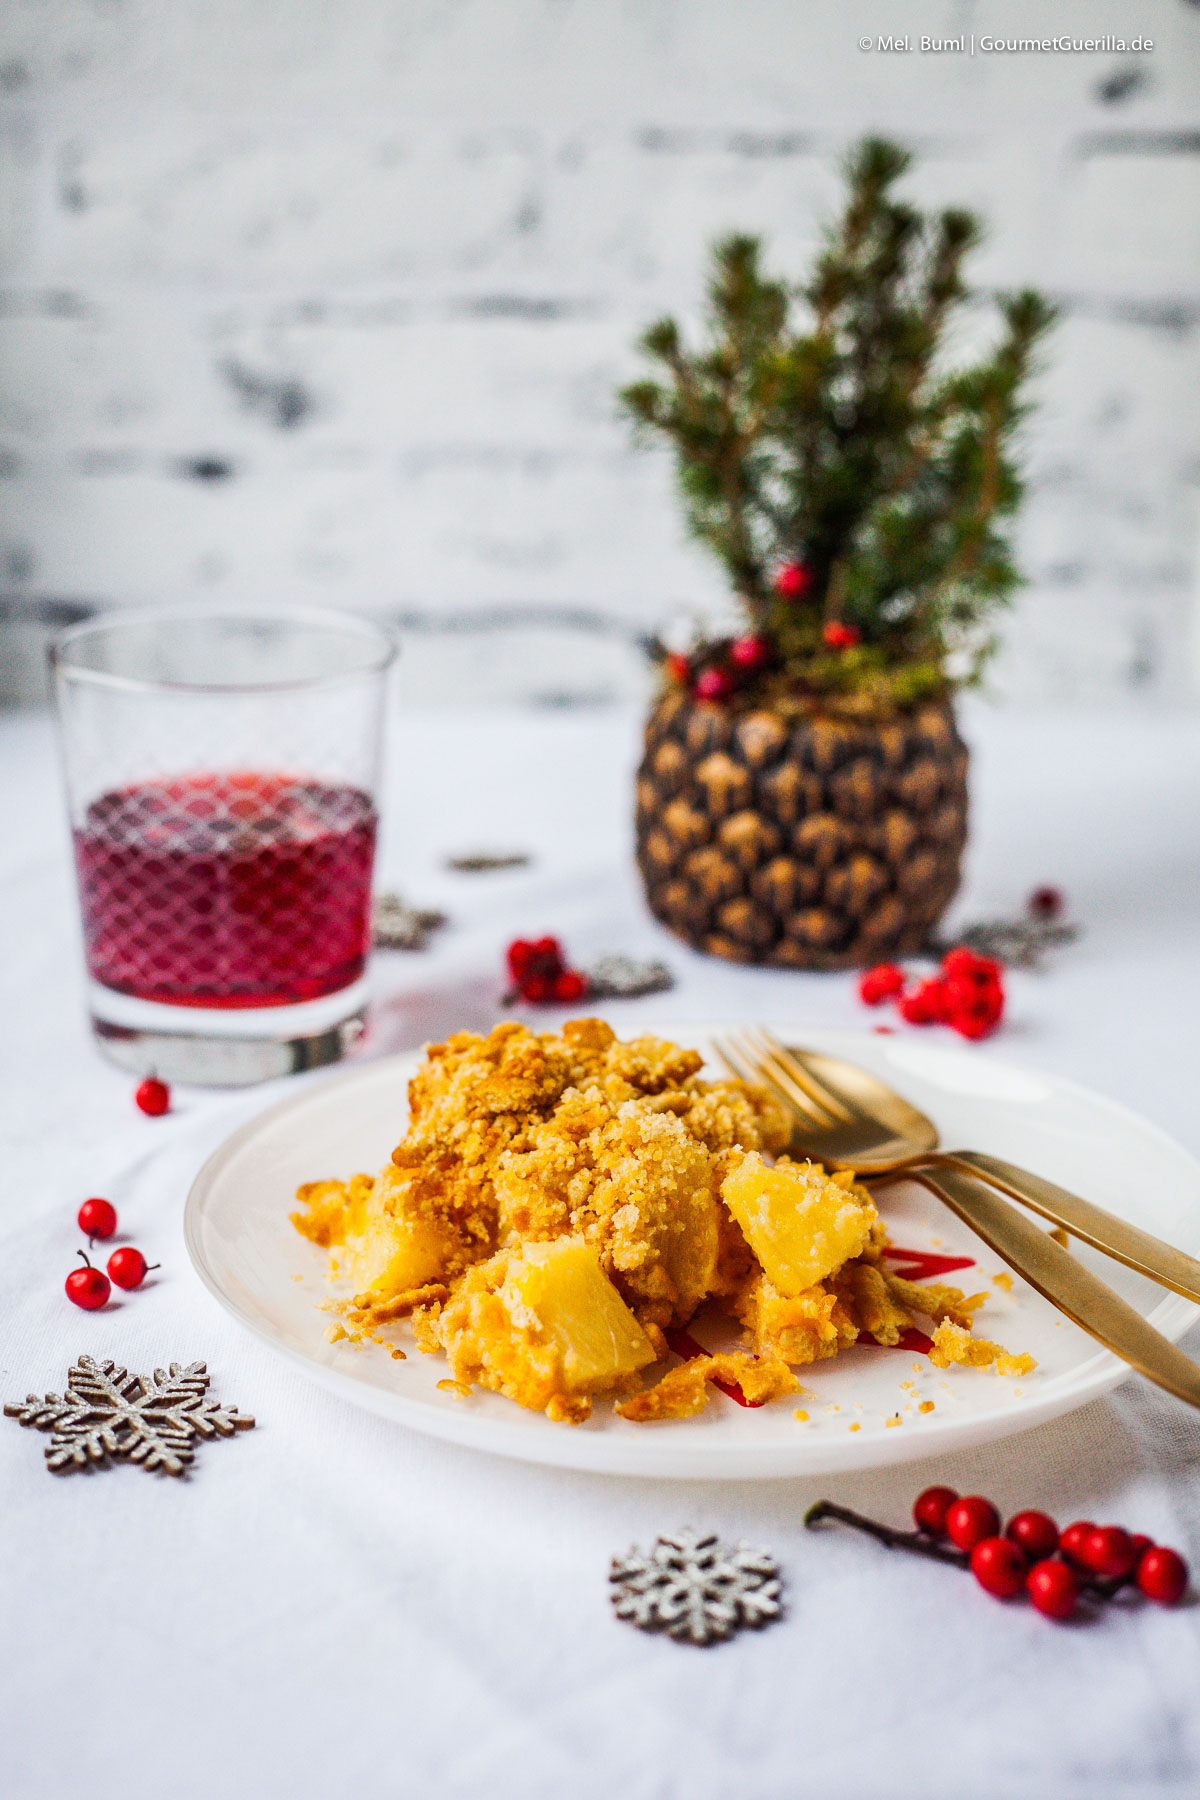 North Carolina Christmas Casserole with Pineapple and Cheddar | GourmetGuerilla.com